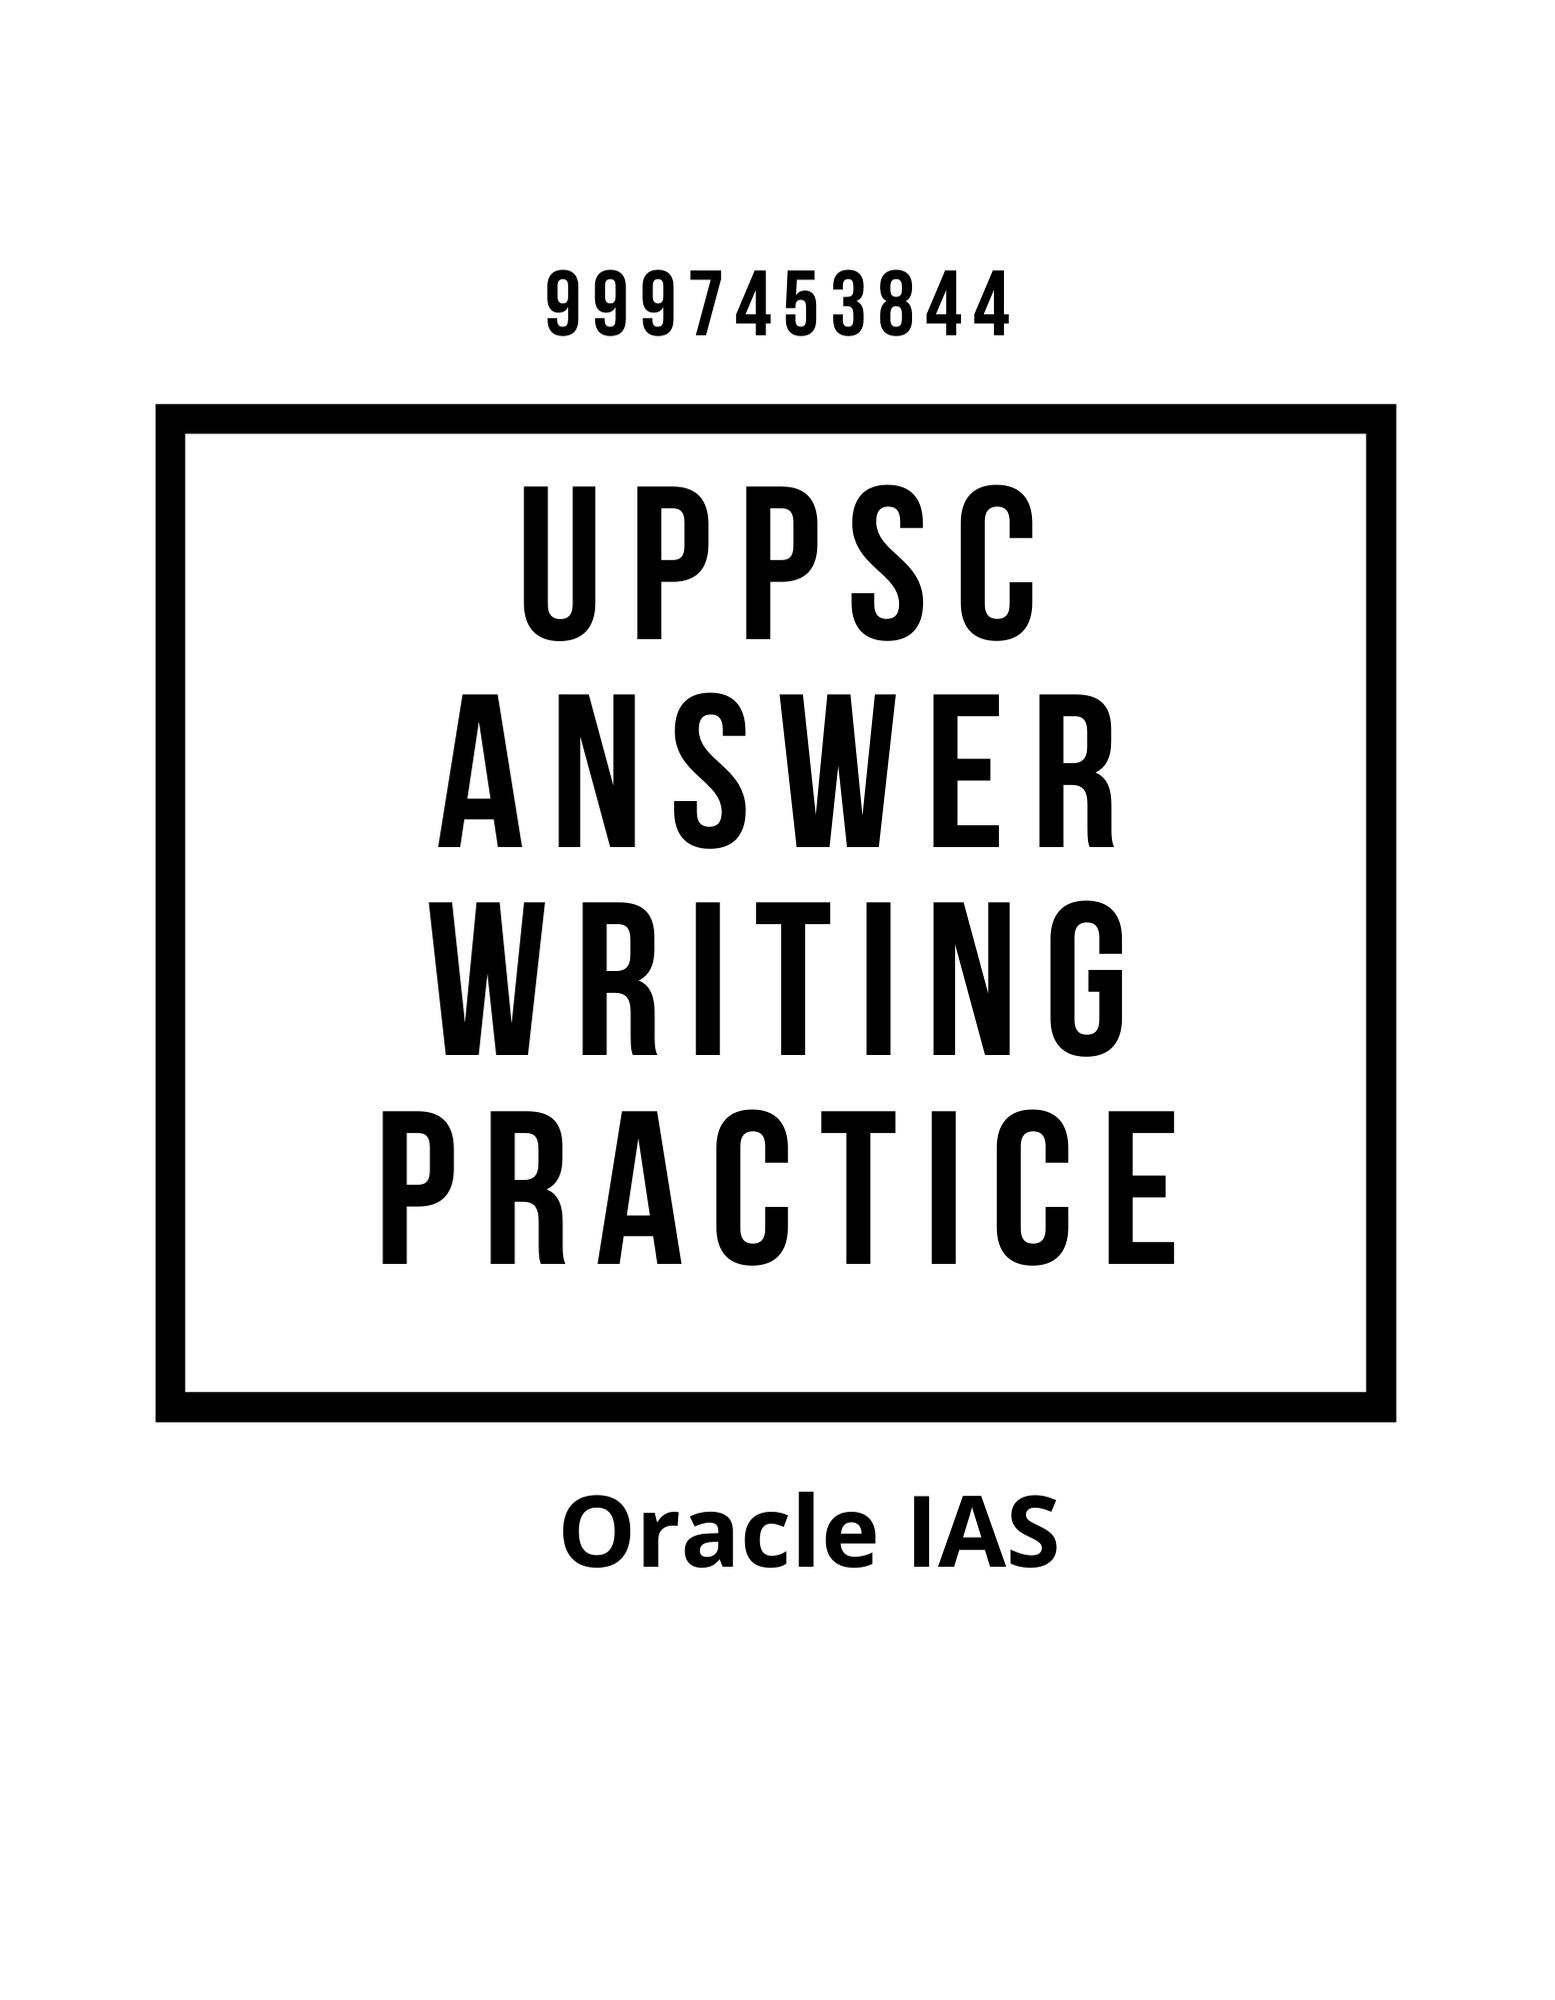 UPPCS Mains model answer